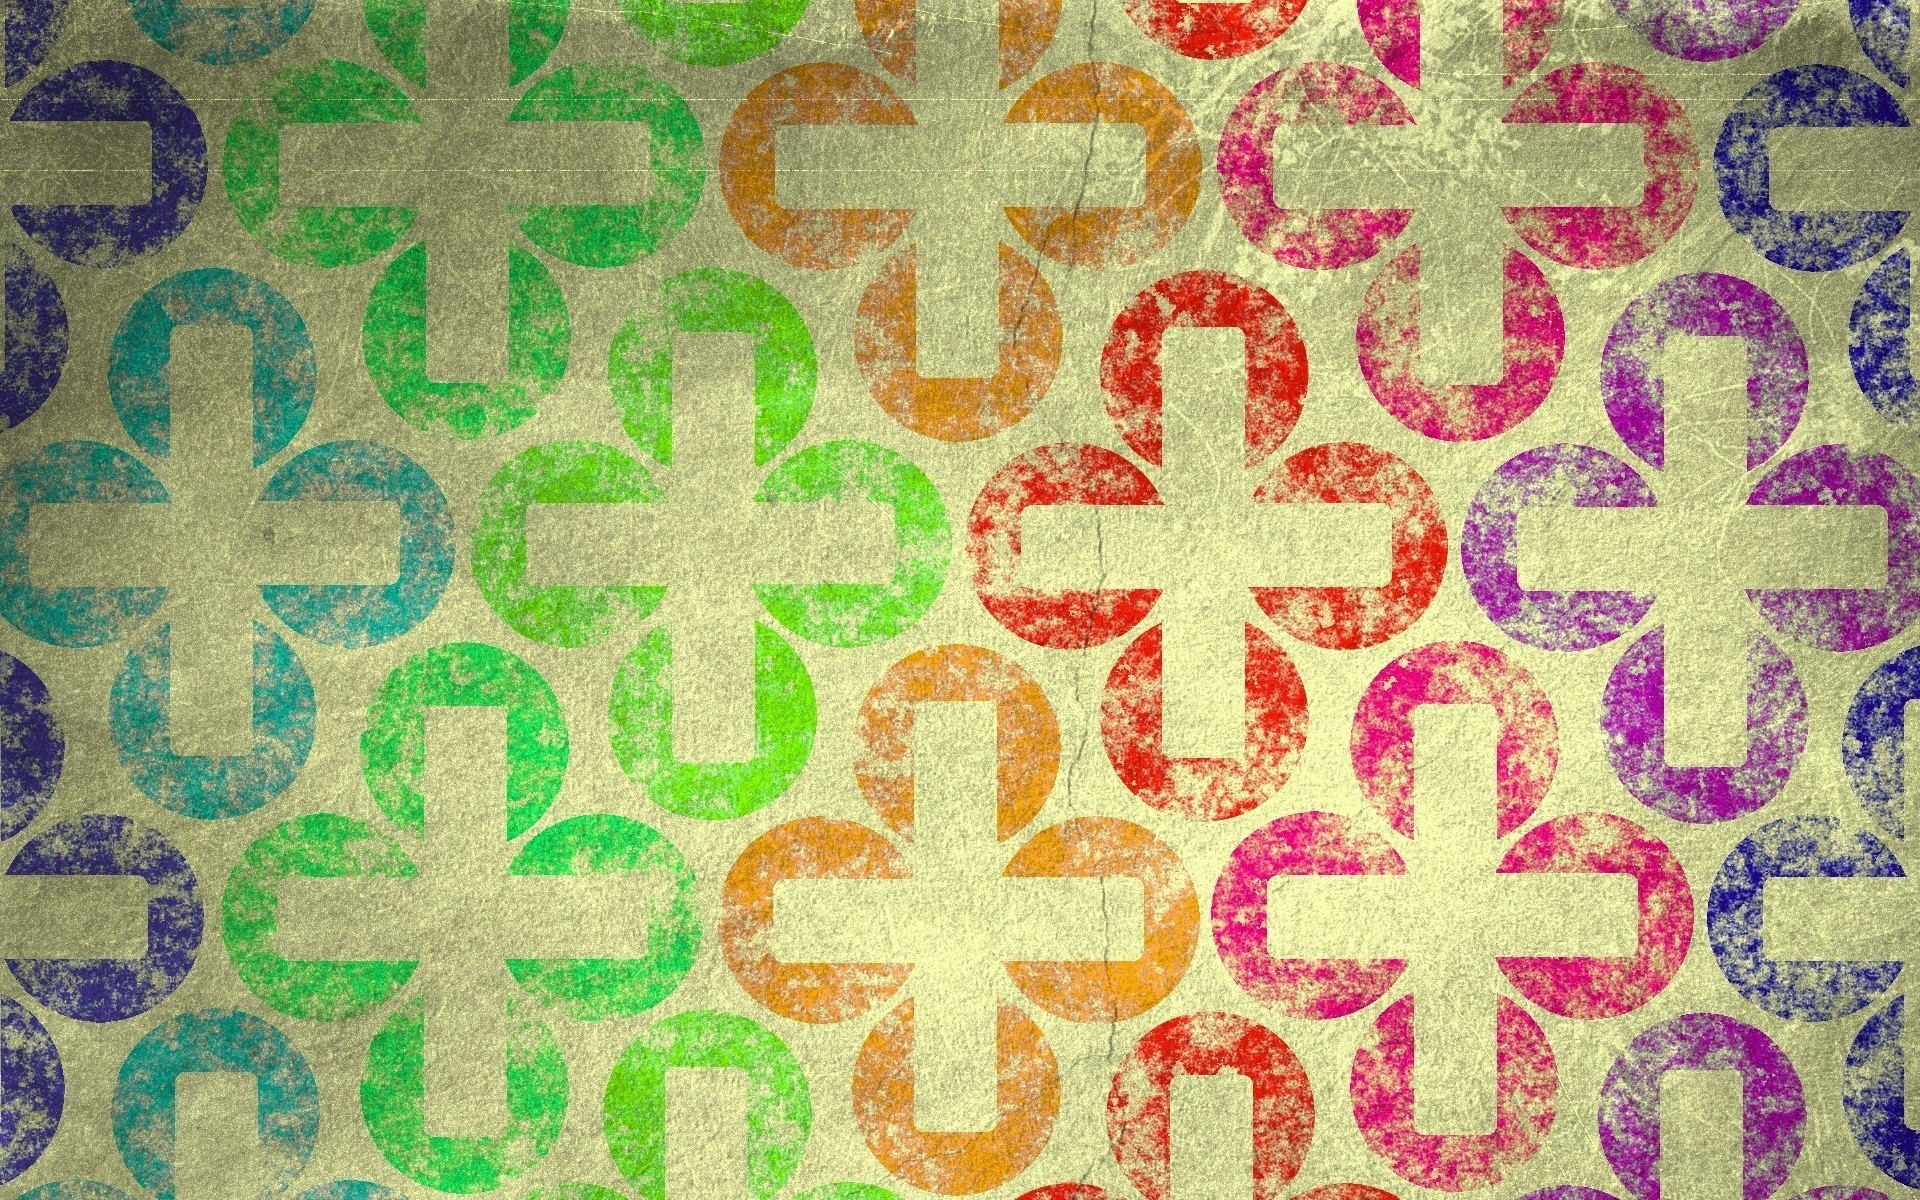 Abstract Cross Wallpaper - خلفيات على شكل صليب , HD Wallpaper & Backgrounds